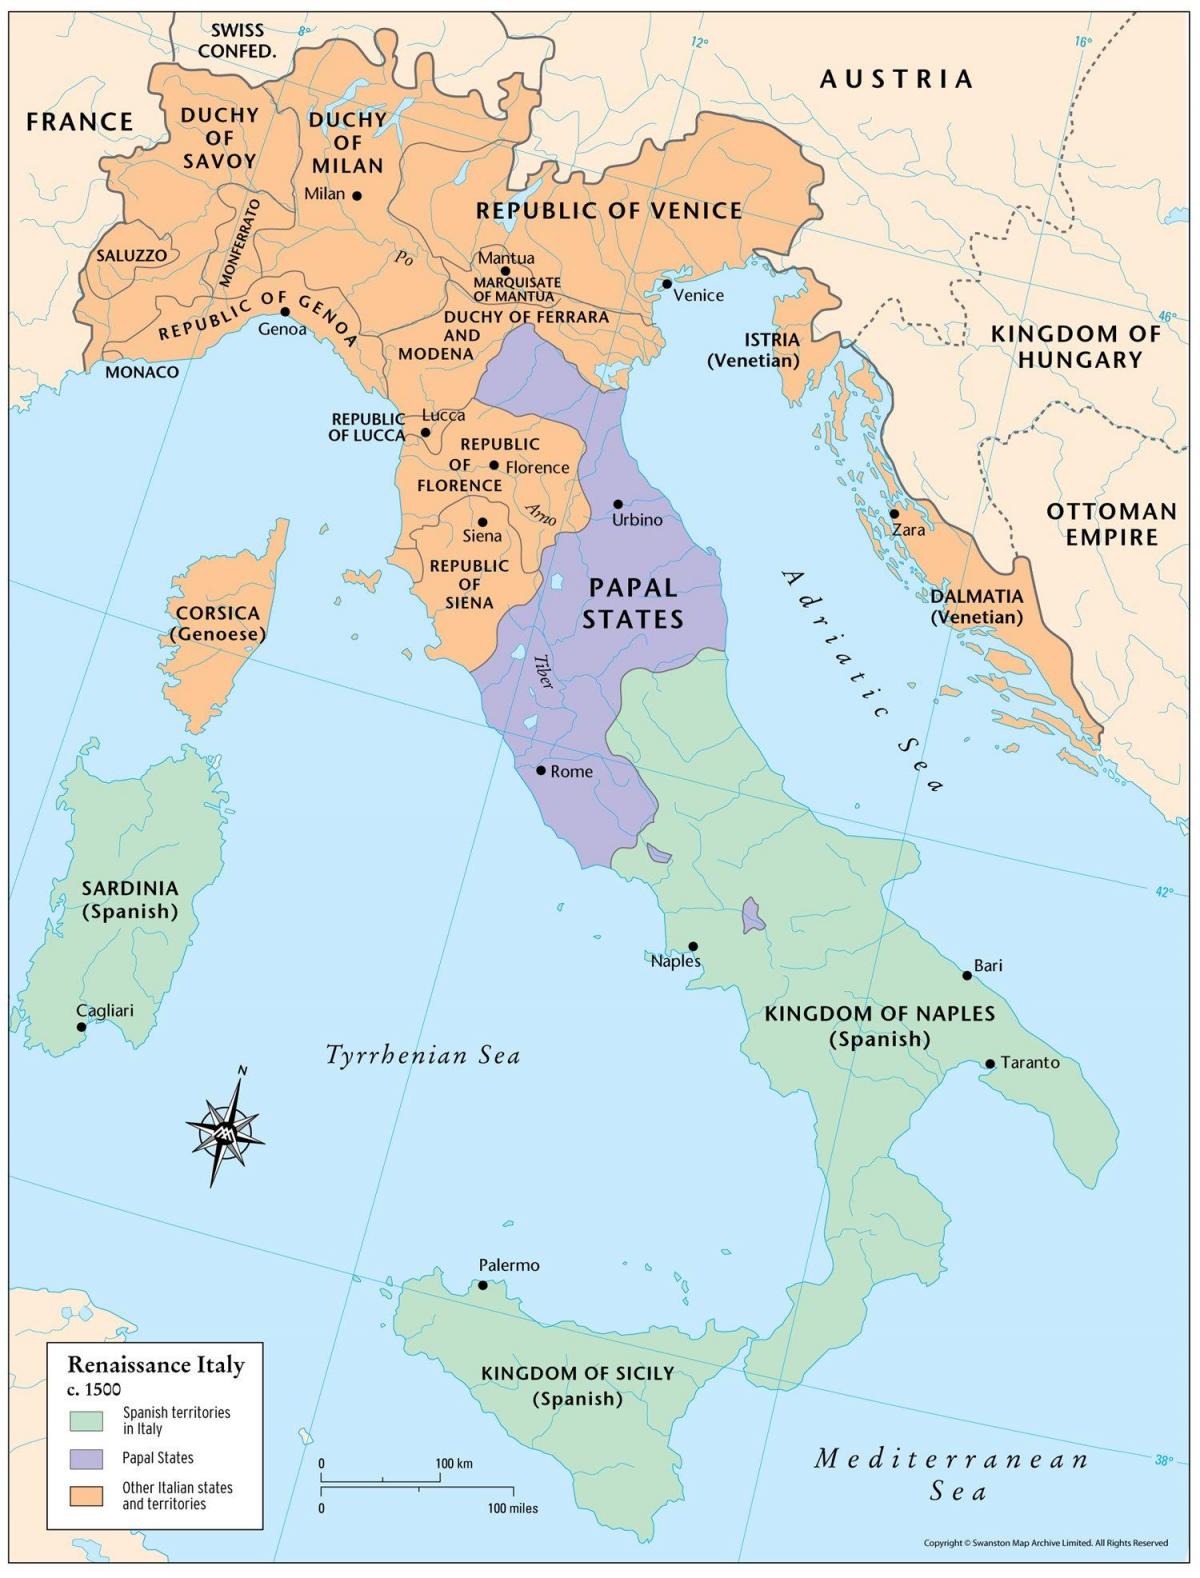 map of Italy renaissance